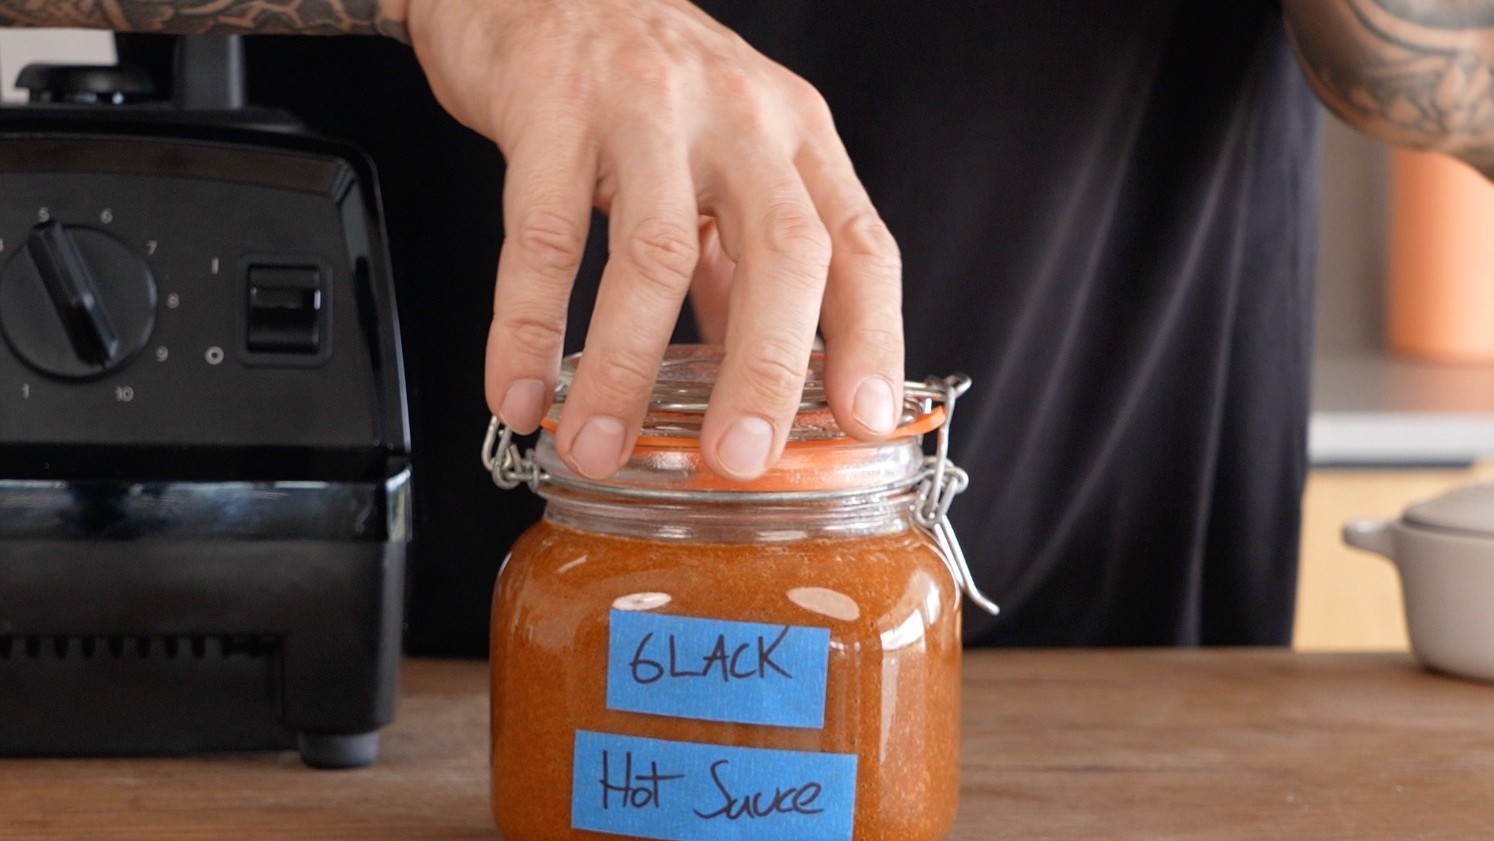 Image of 6black hot sauce